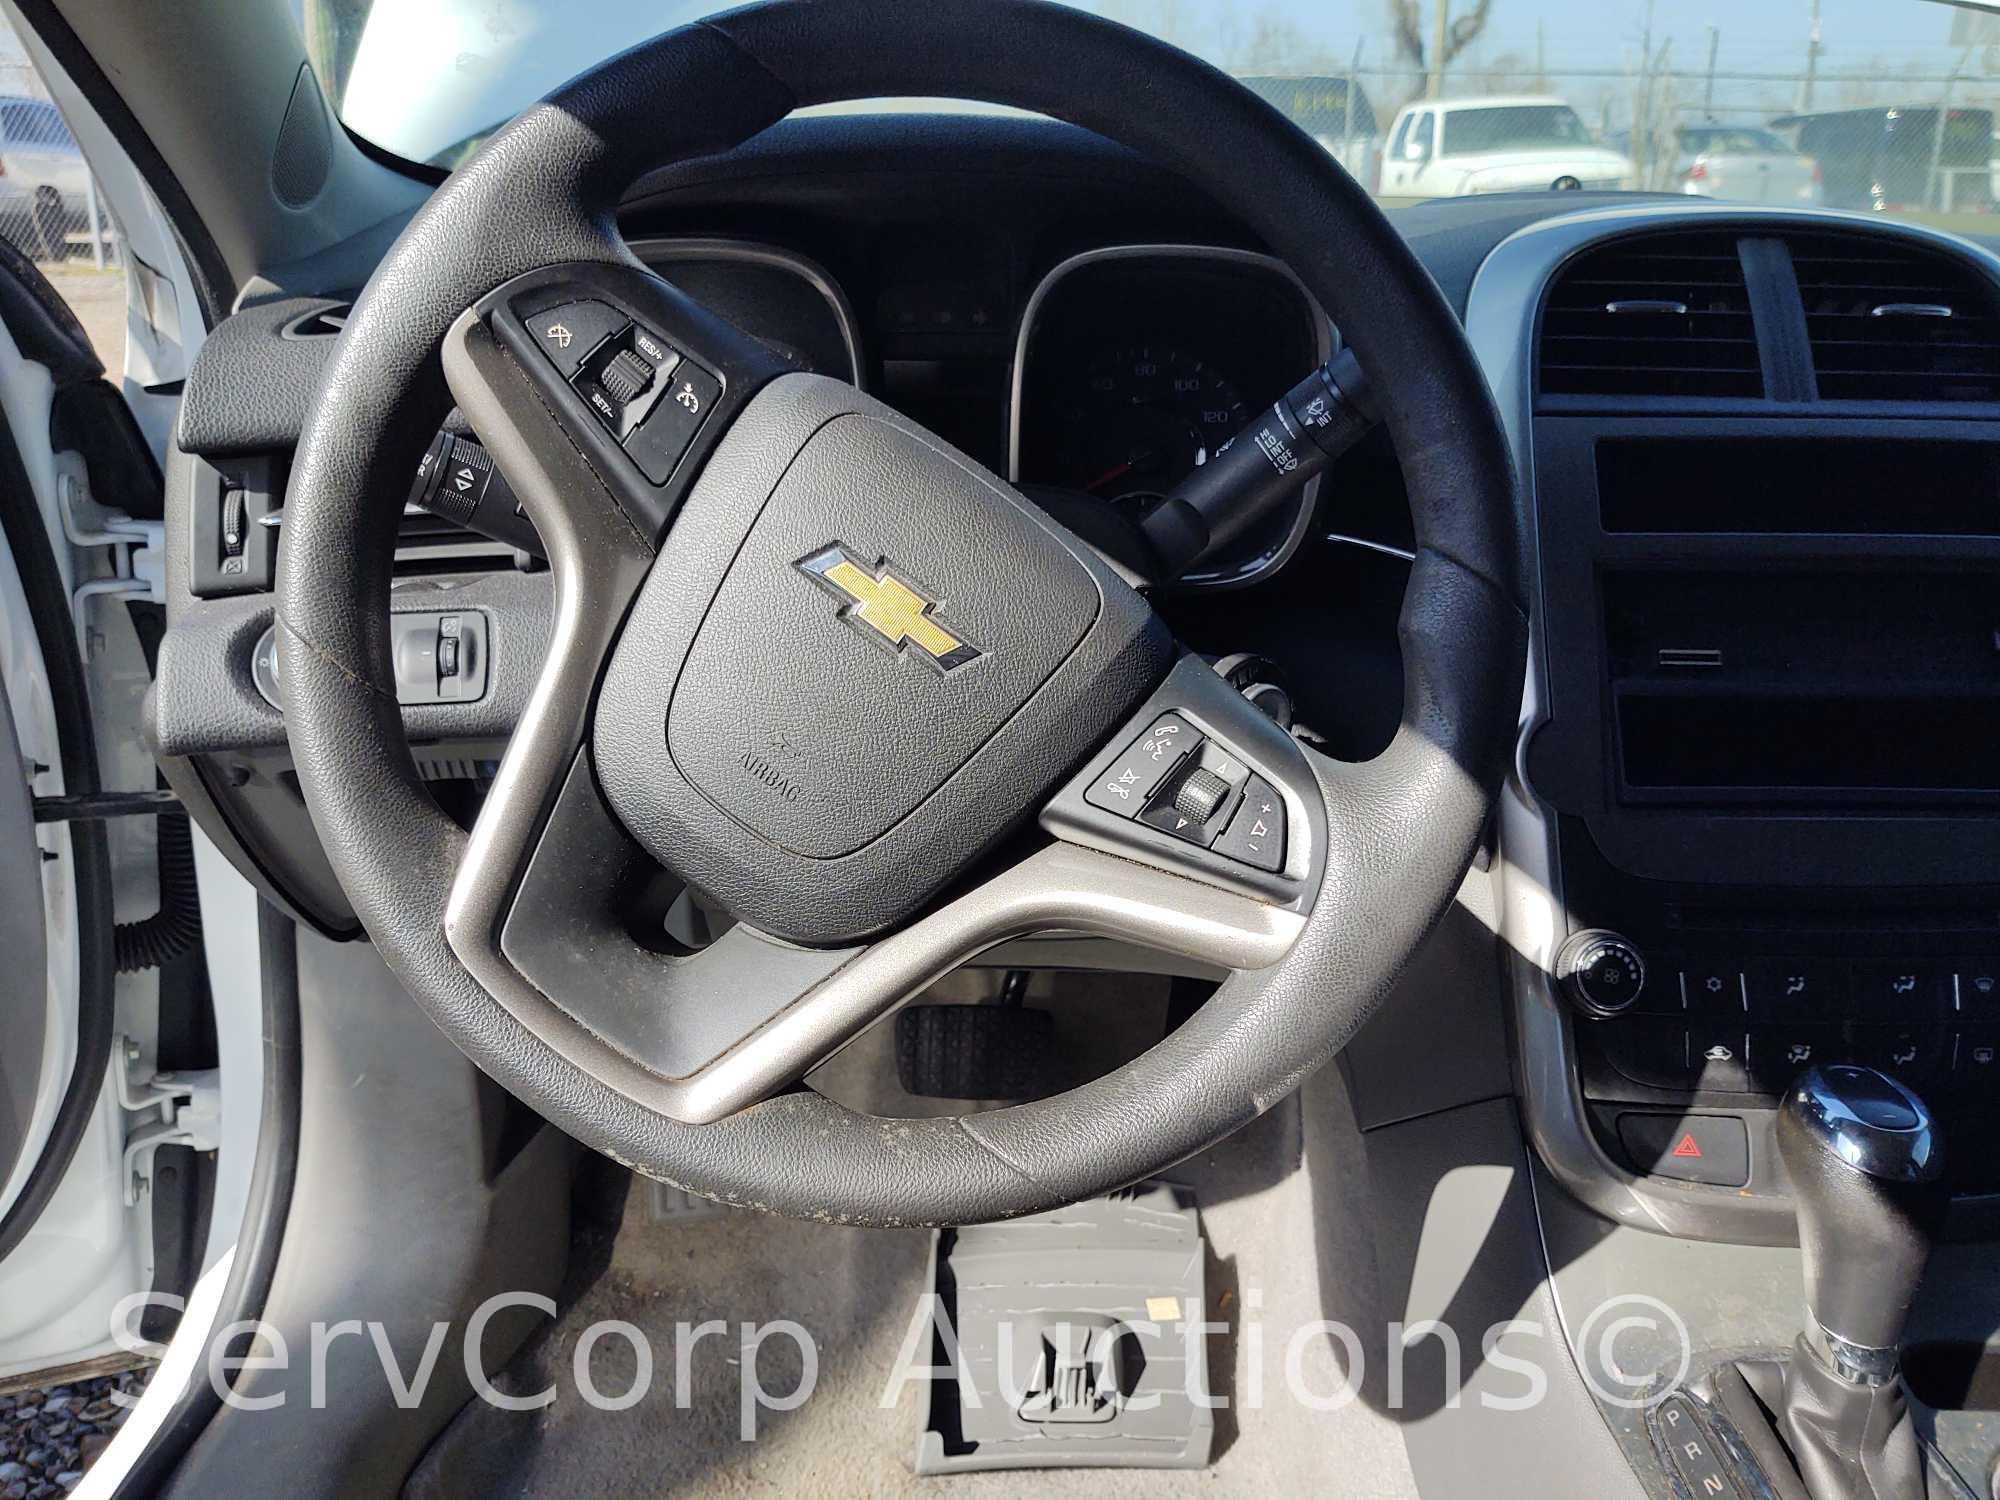 2014 Chevrolet Malibu Passenger Car, VIN # 1G11A5SL3EF242509 Reconstucted